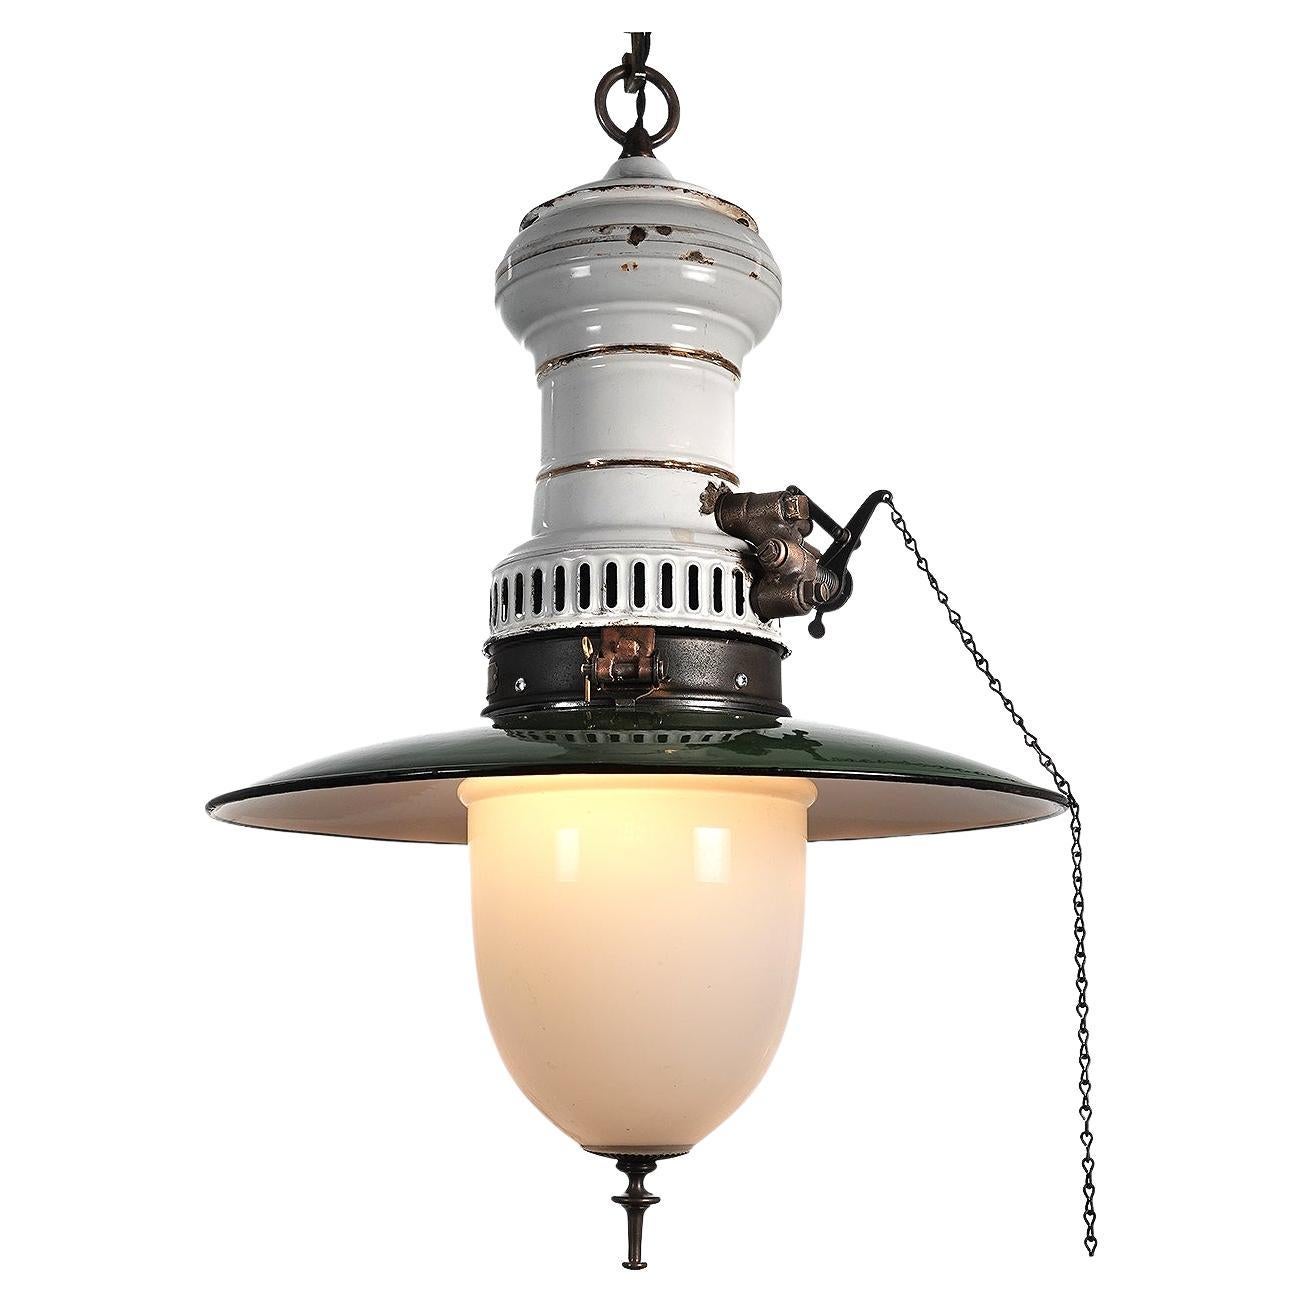 Humphrey Gas Lamp with Deep Milk Glass Shade